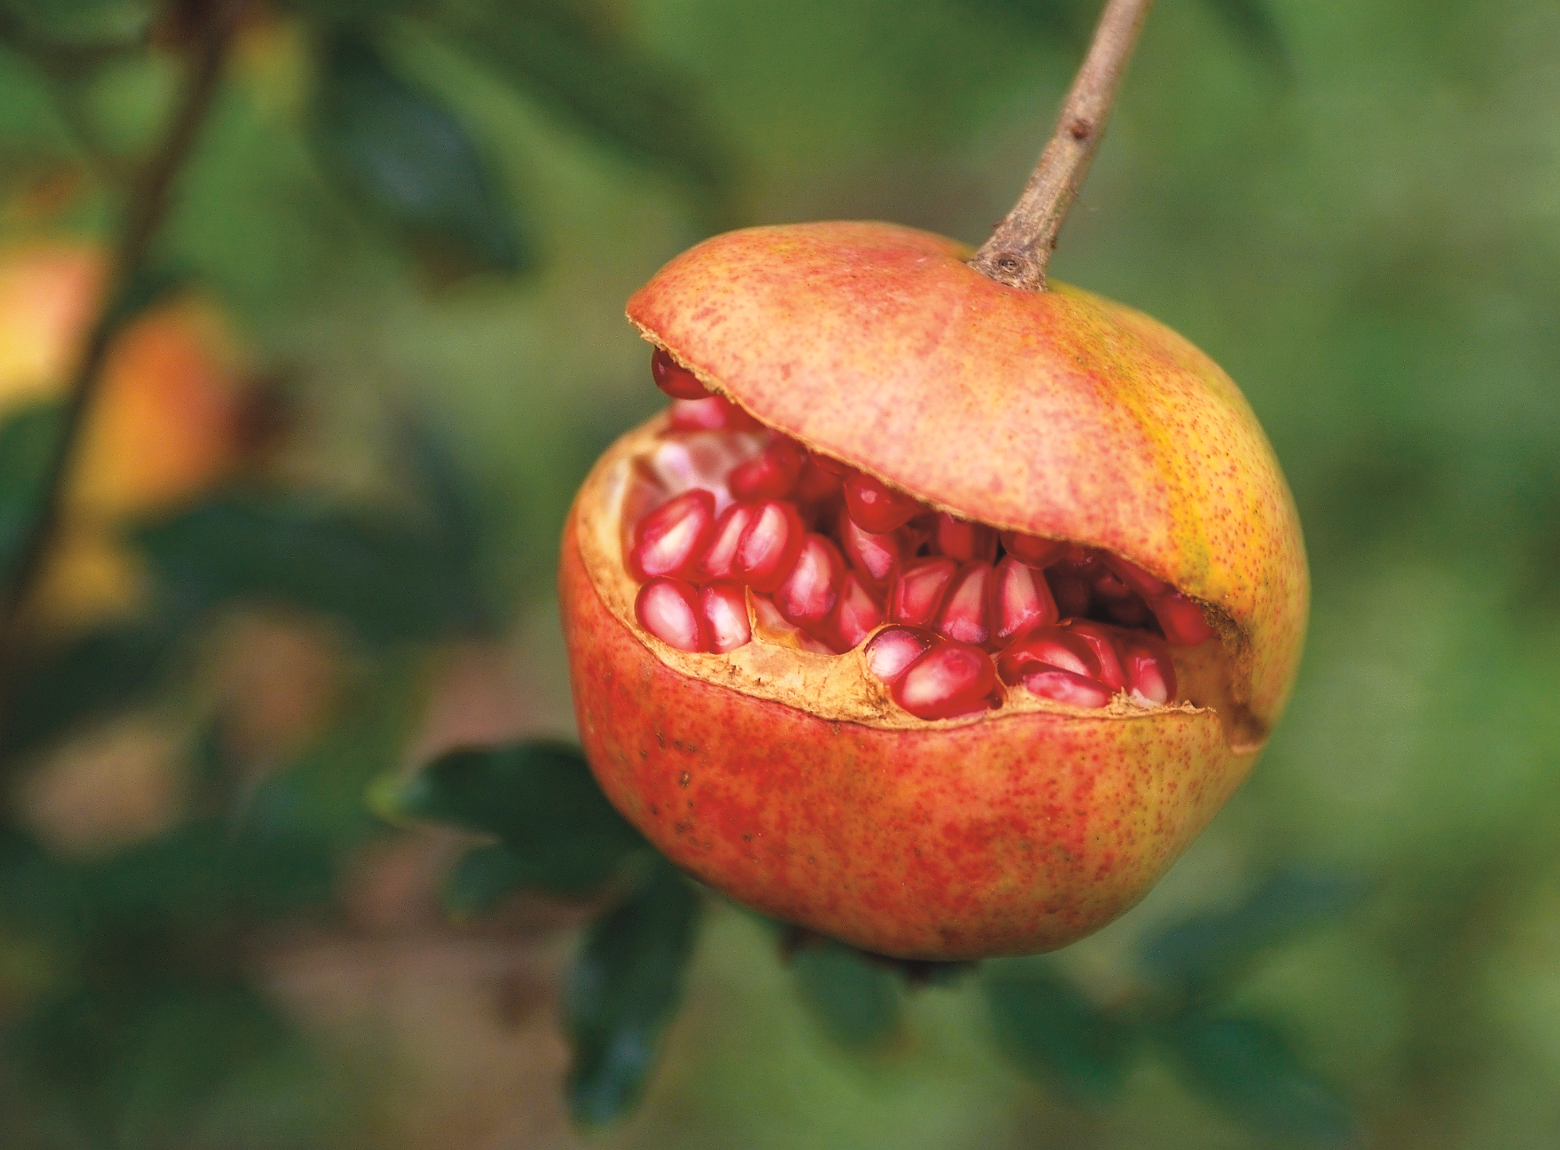 Fascinating fruits!